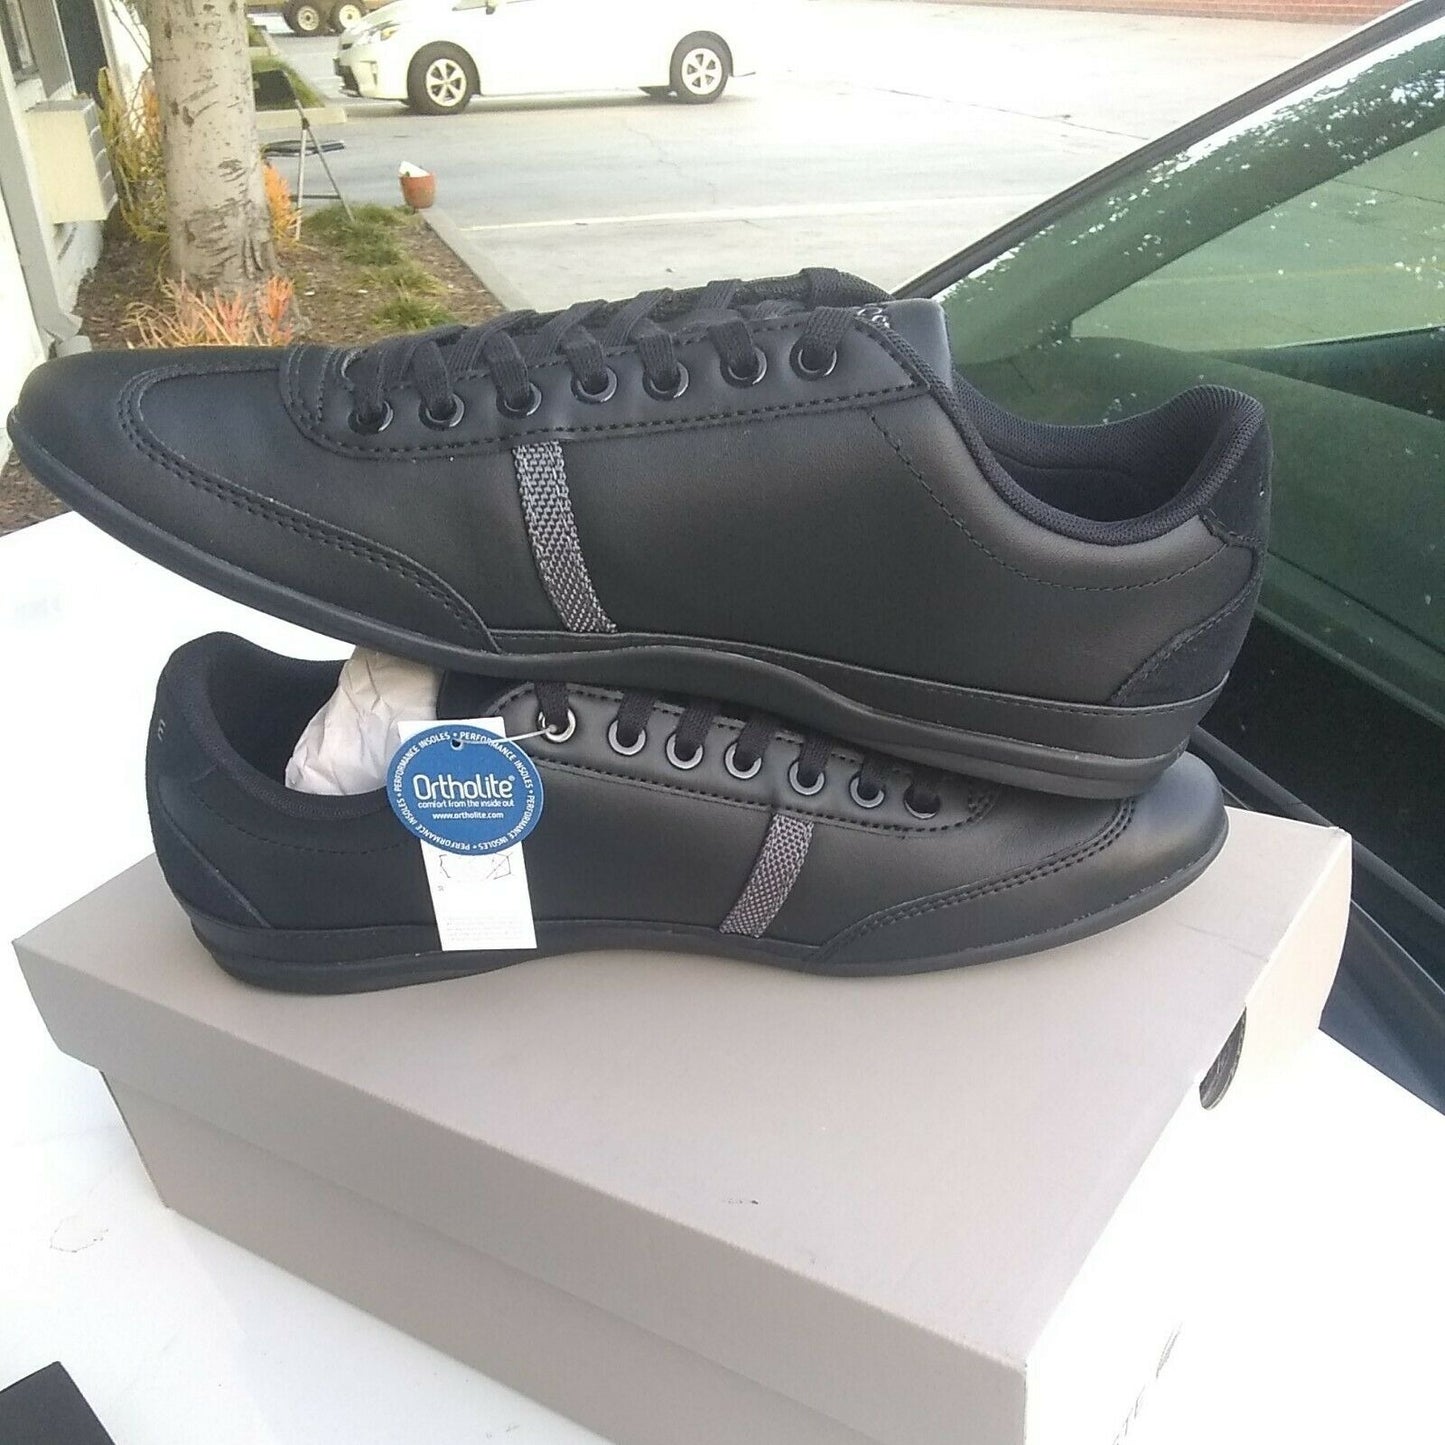 Lacoste men casual shoes 9.5 Misano sport 118 1 u cam black grey